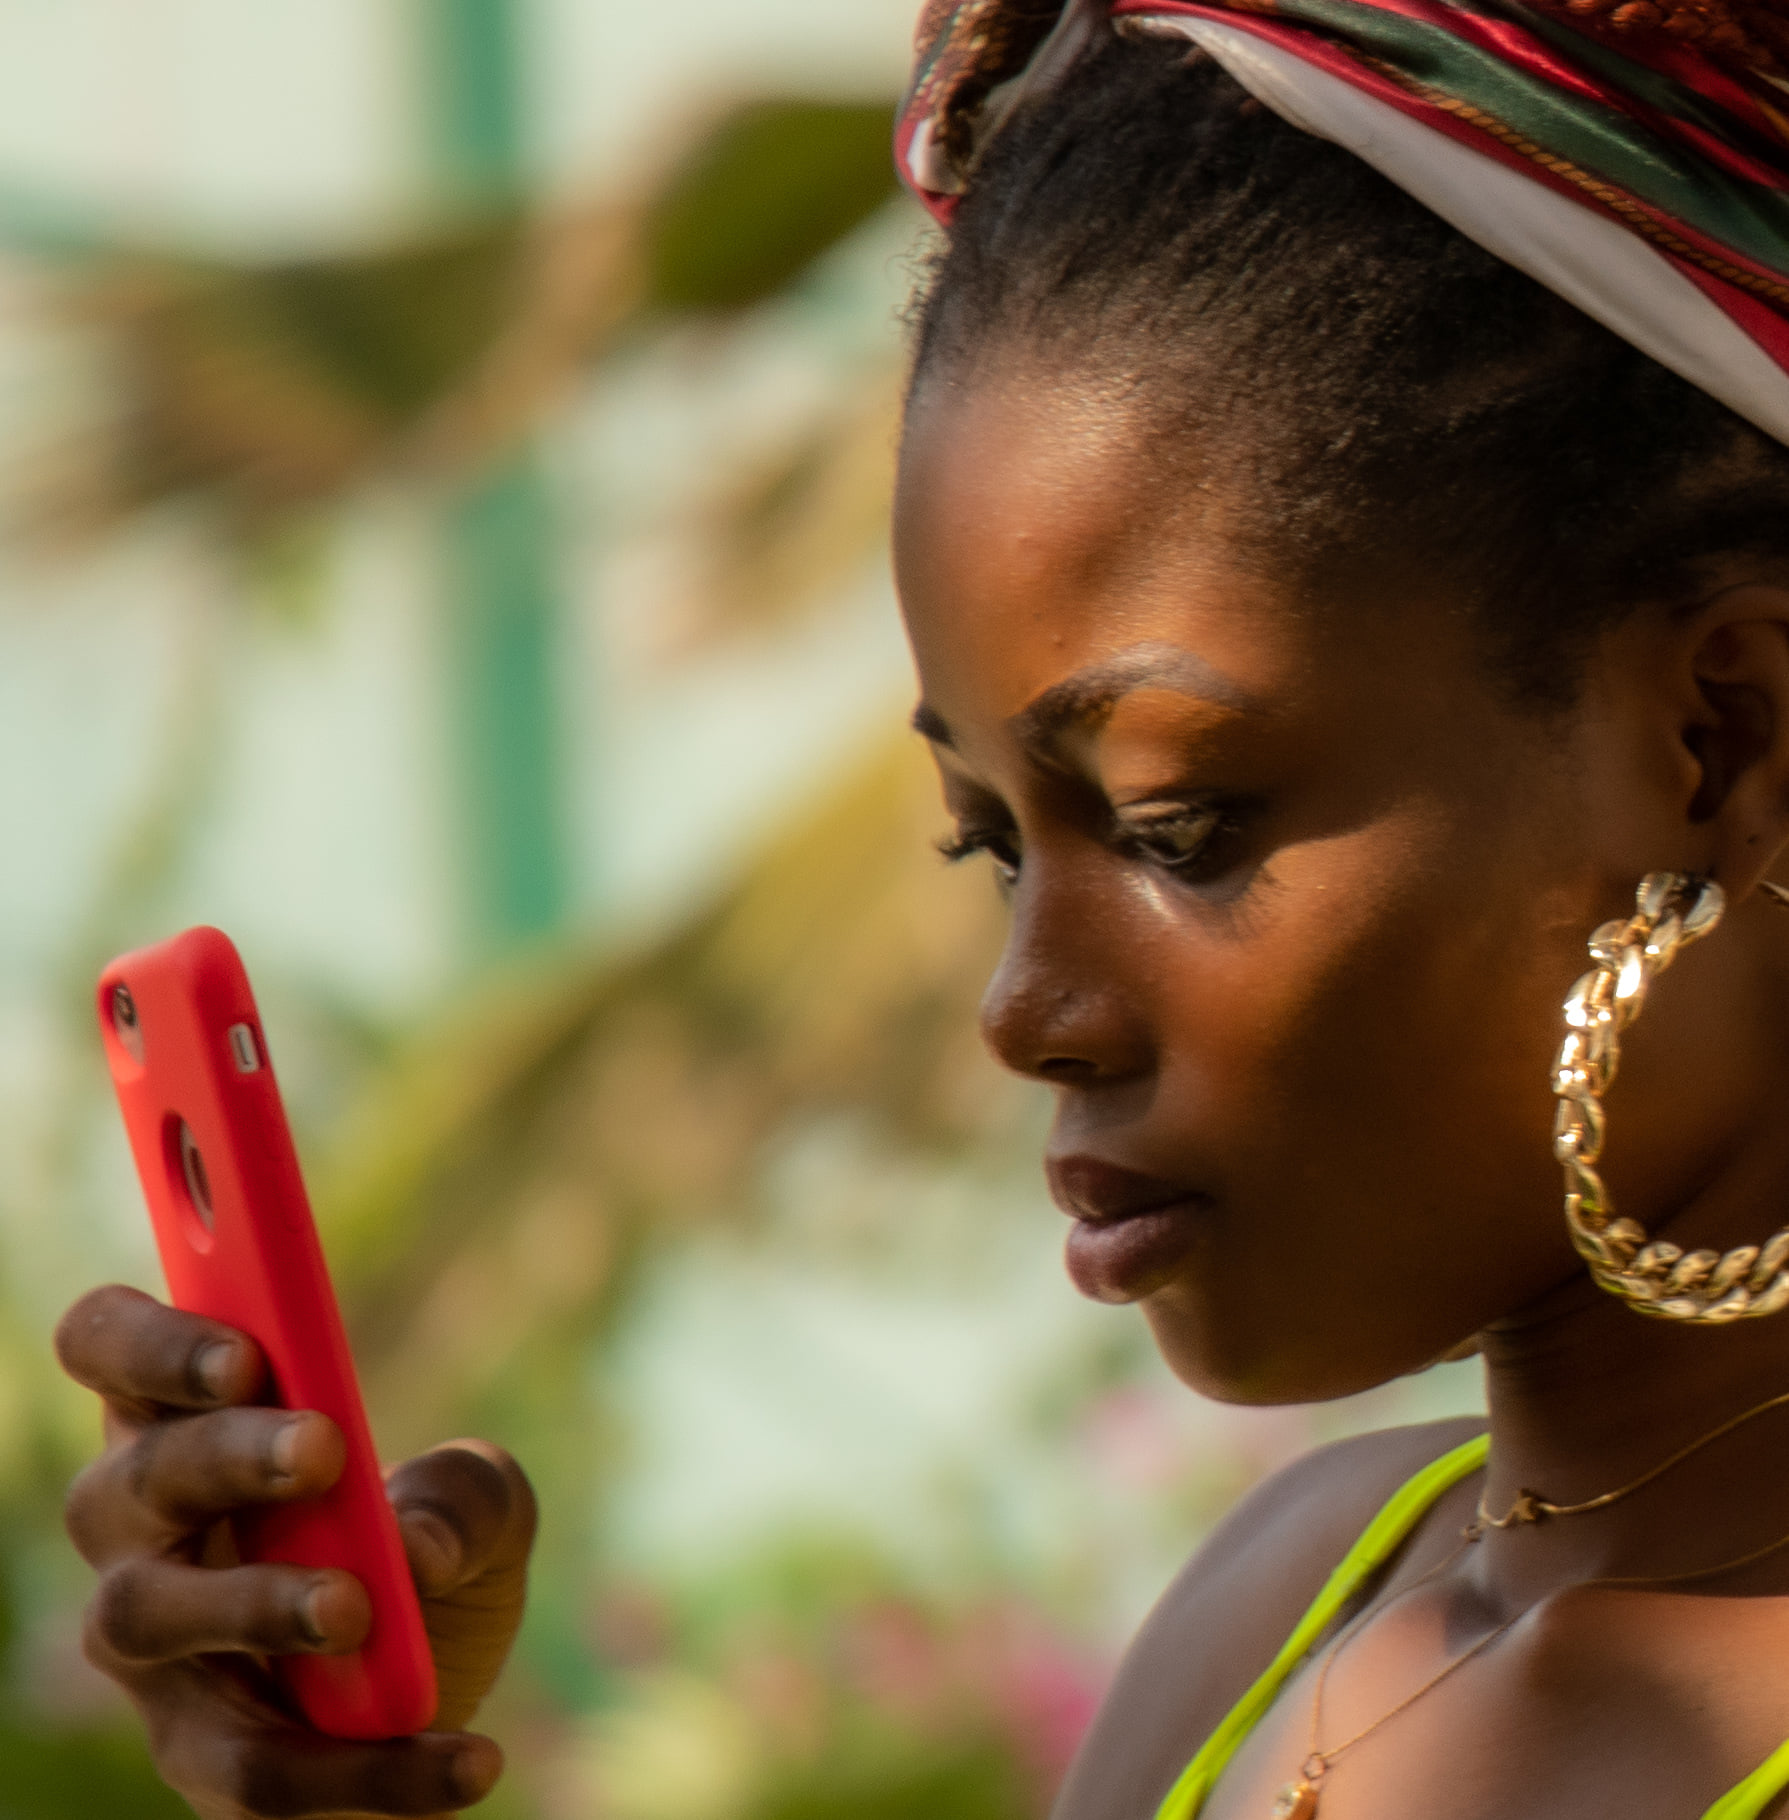 Advertising Revenue Can Finance Smartphones for Women in Africa